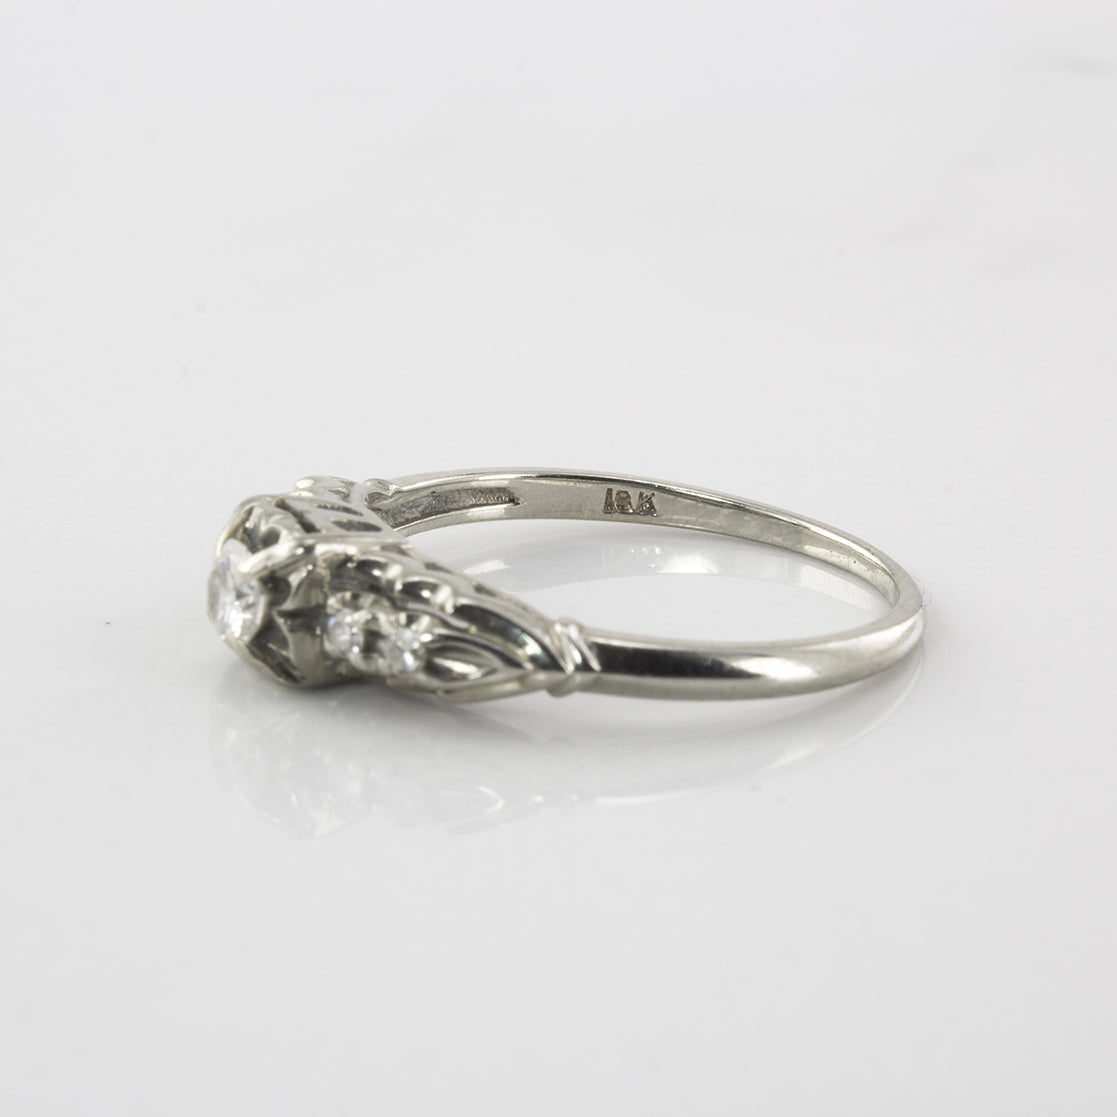 Art Deco Diamond Engagement Ring | 0.19 ctw | SZ 6.75 |